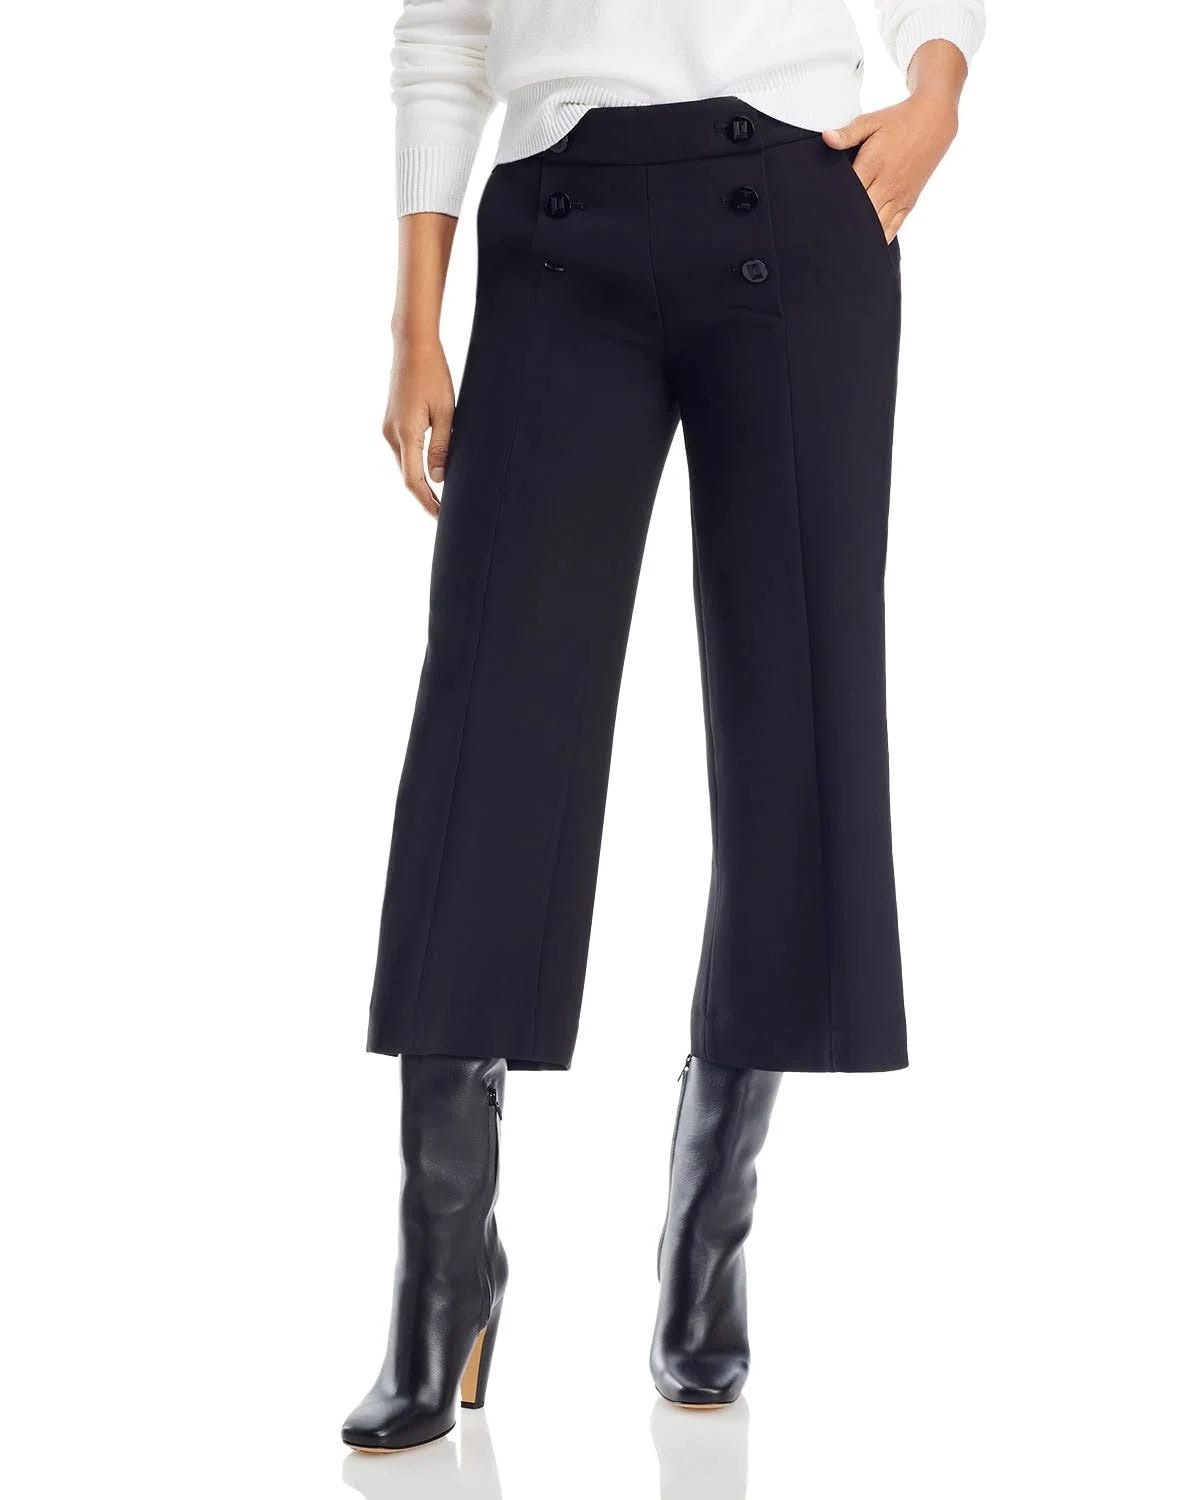 Elegant Karl Lagerfeld Paris Black Cropped Pants | Image